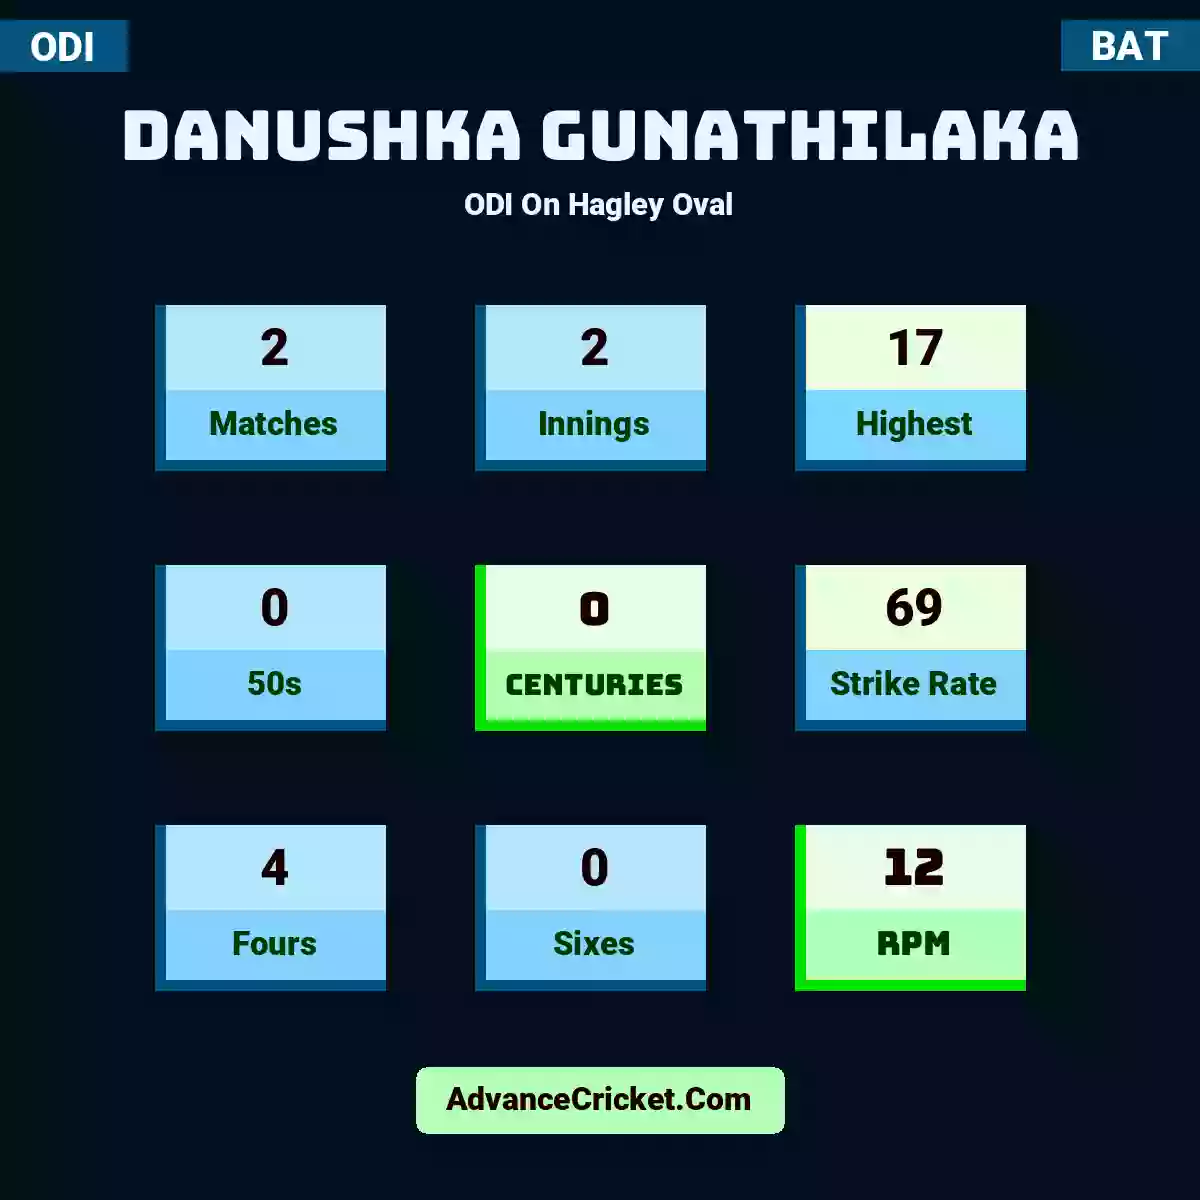 Danushka Gunathilaka ODI  On Hagley Oval, Danushka Gunathilaka played 2 matches, scored 17 runs as highest, 0 half-centuries, and 0 centuries, with a strike rate of 69. D.Gunathilaka hit 4 fours and 0 sixes, with an RPM of 12.